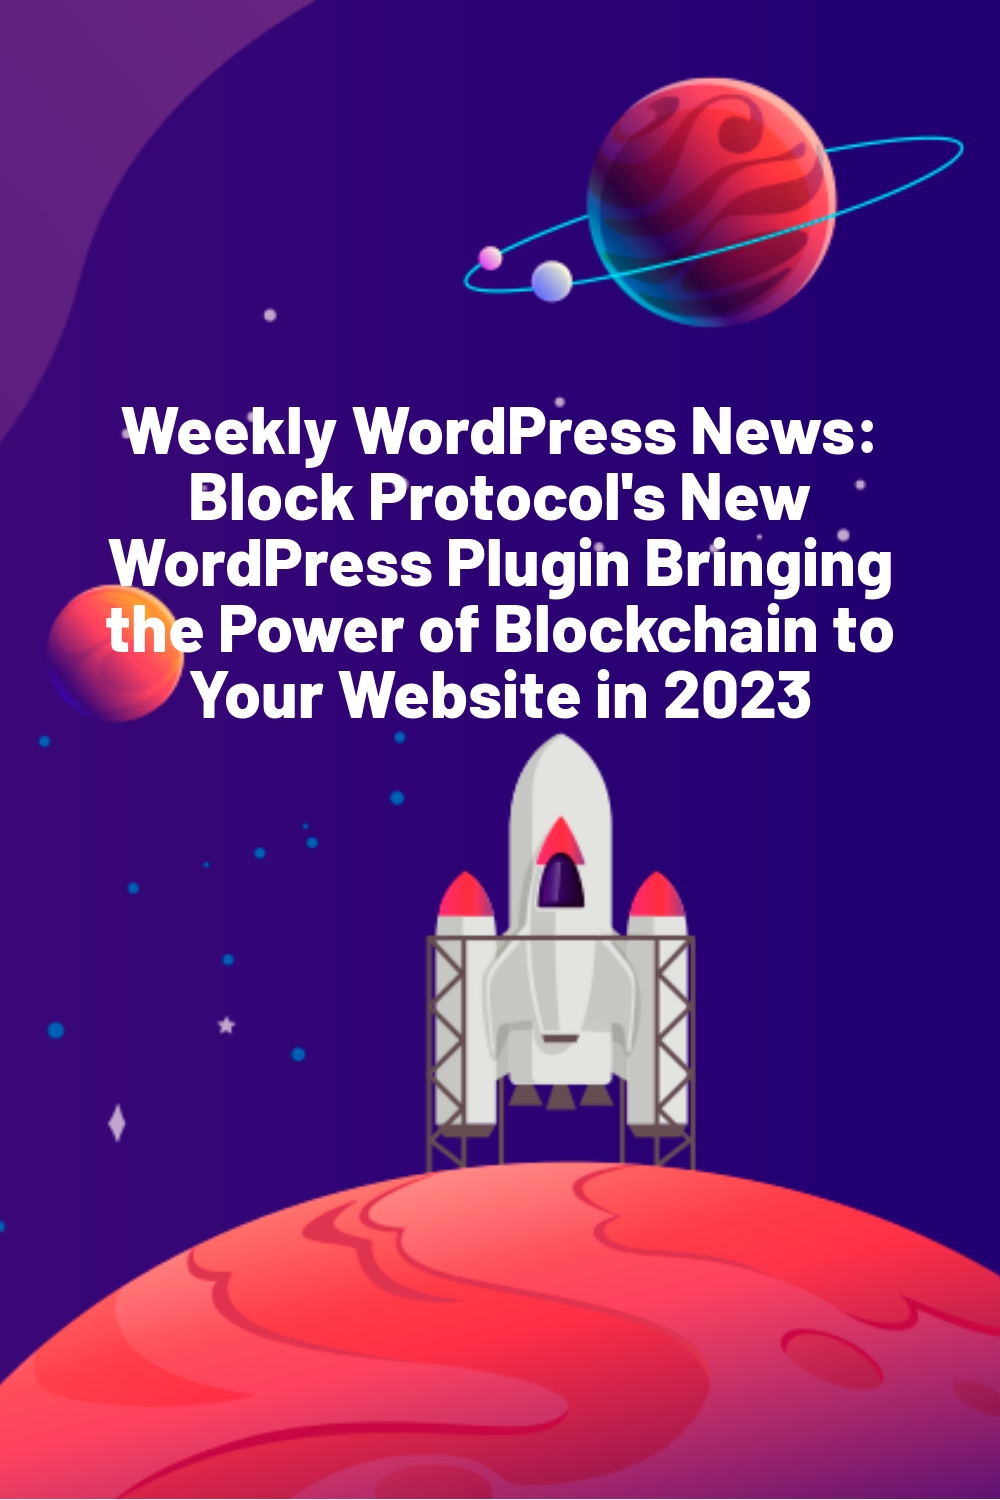 Weekly WordPress News: Block Protocol’s New WordPress Plugin Bringing the Power of Blockchain to Your Website in 2023